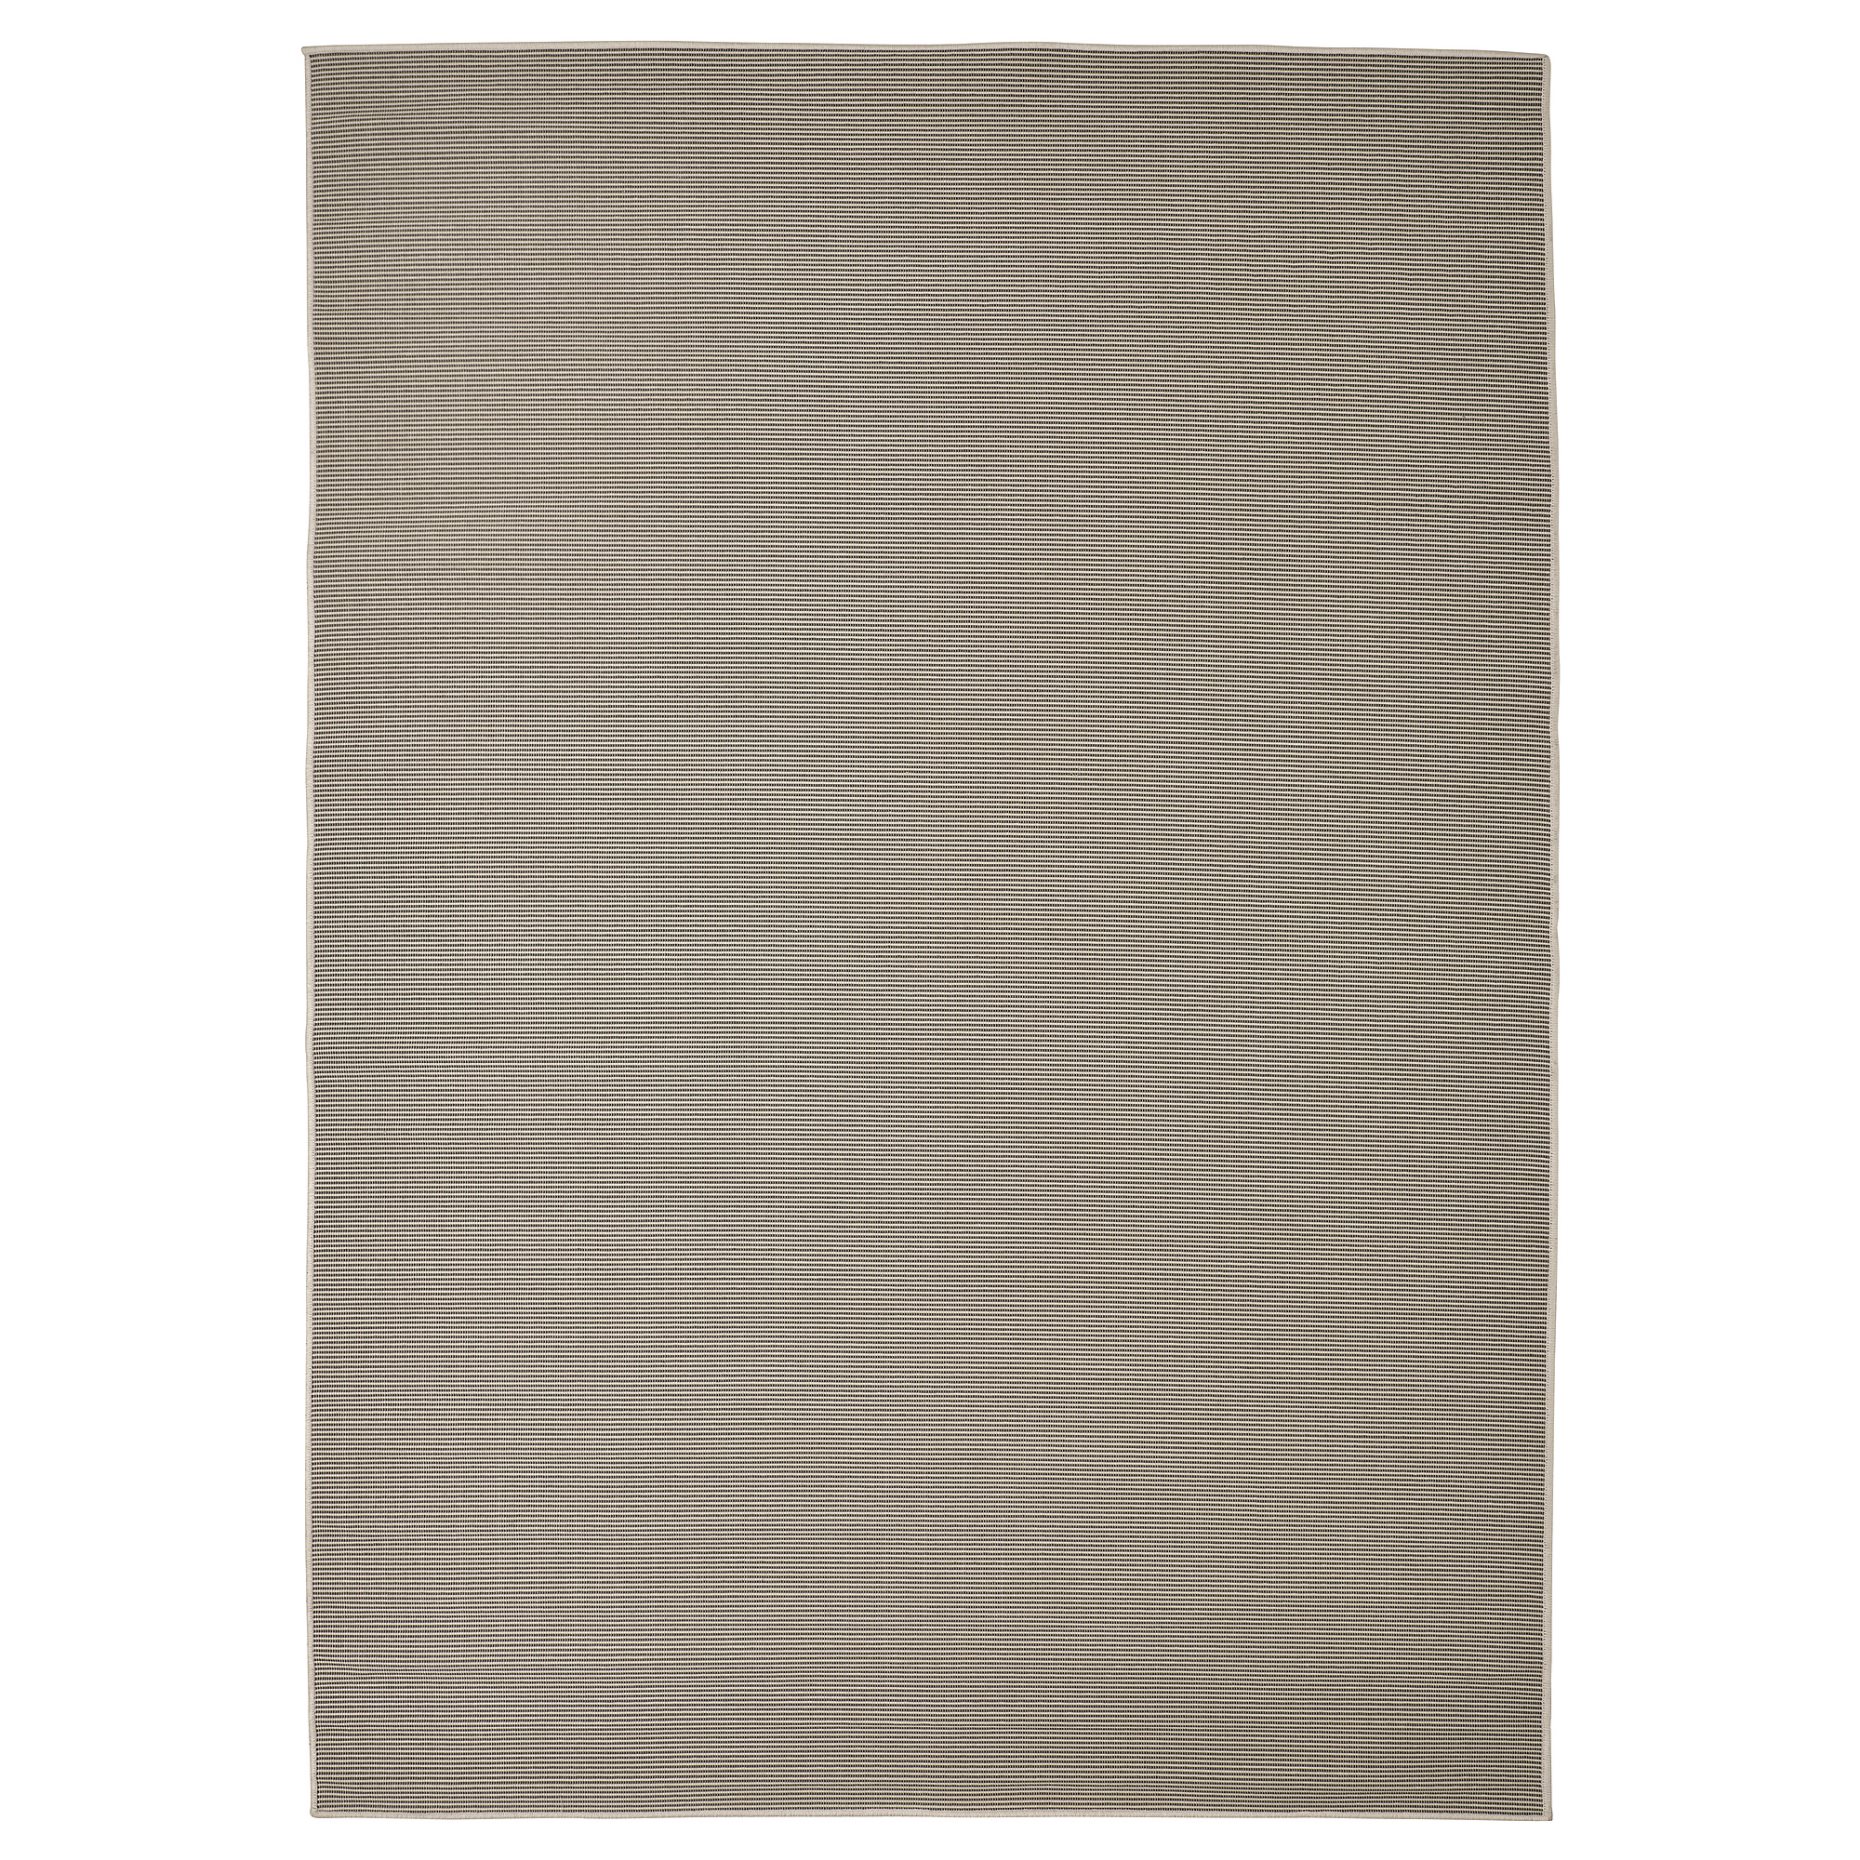 VIRKLUND, rug flatwoven in/outdoor, 160x230 cm, 505.179.44